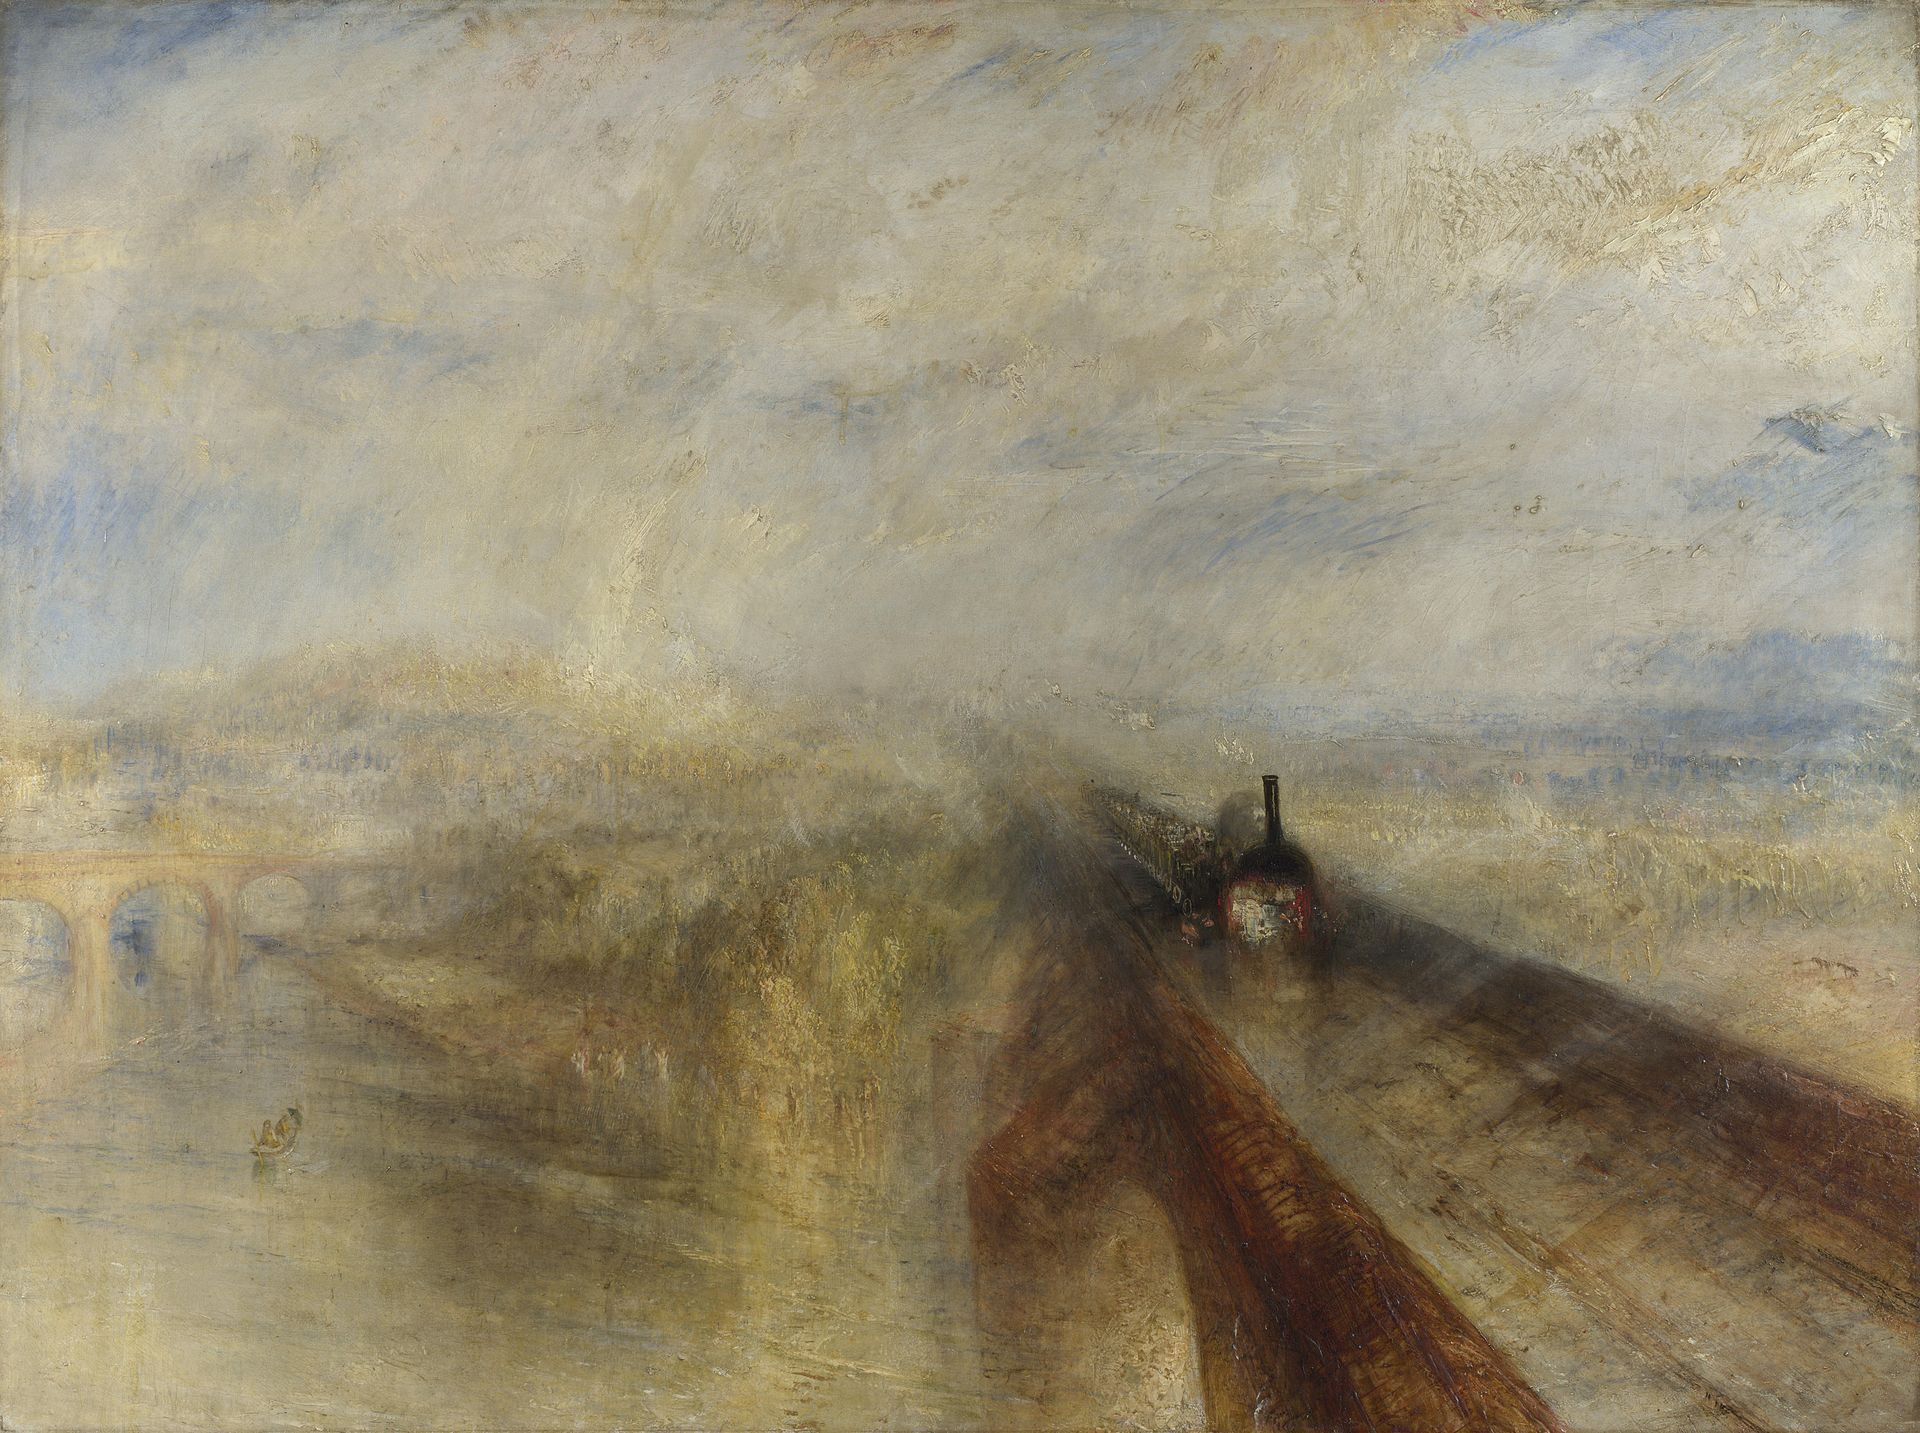 वर्षा, भाप और गति - महान पश्चिमी रेलवे by Joseph Mallord William Turner - 1844 - 91 x 121.8 cm 